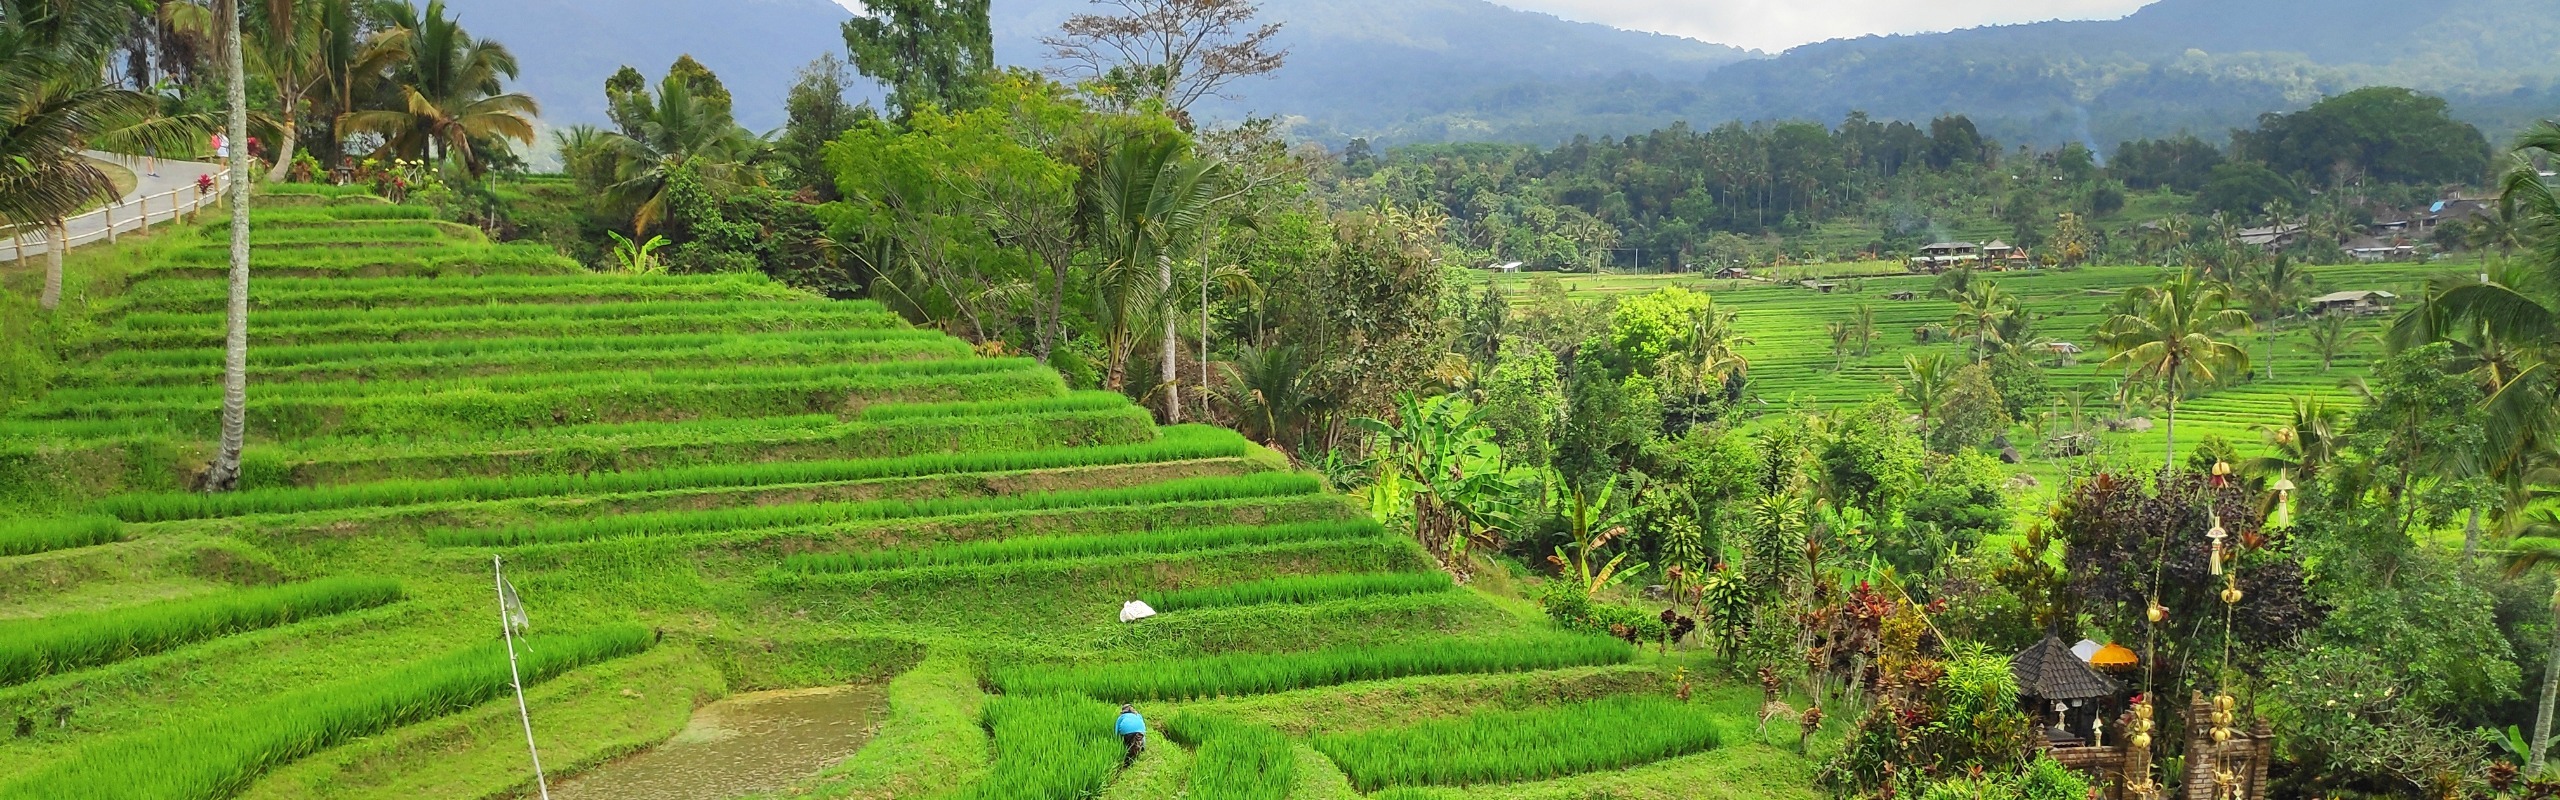 Bali Rice Terraces: The Best 8 Rice Terraces in Bali